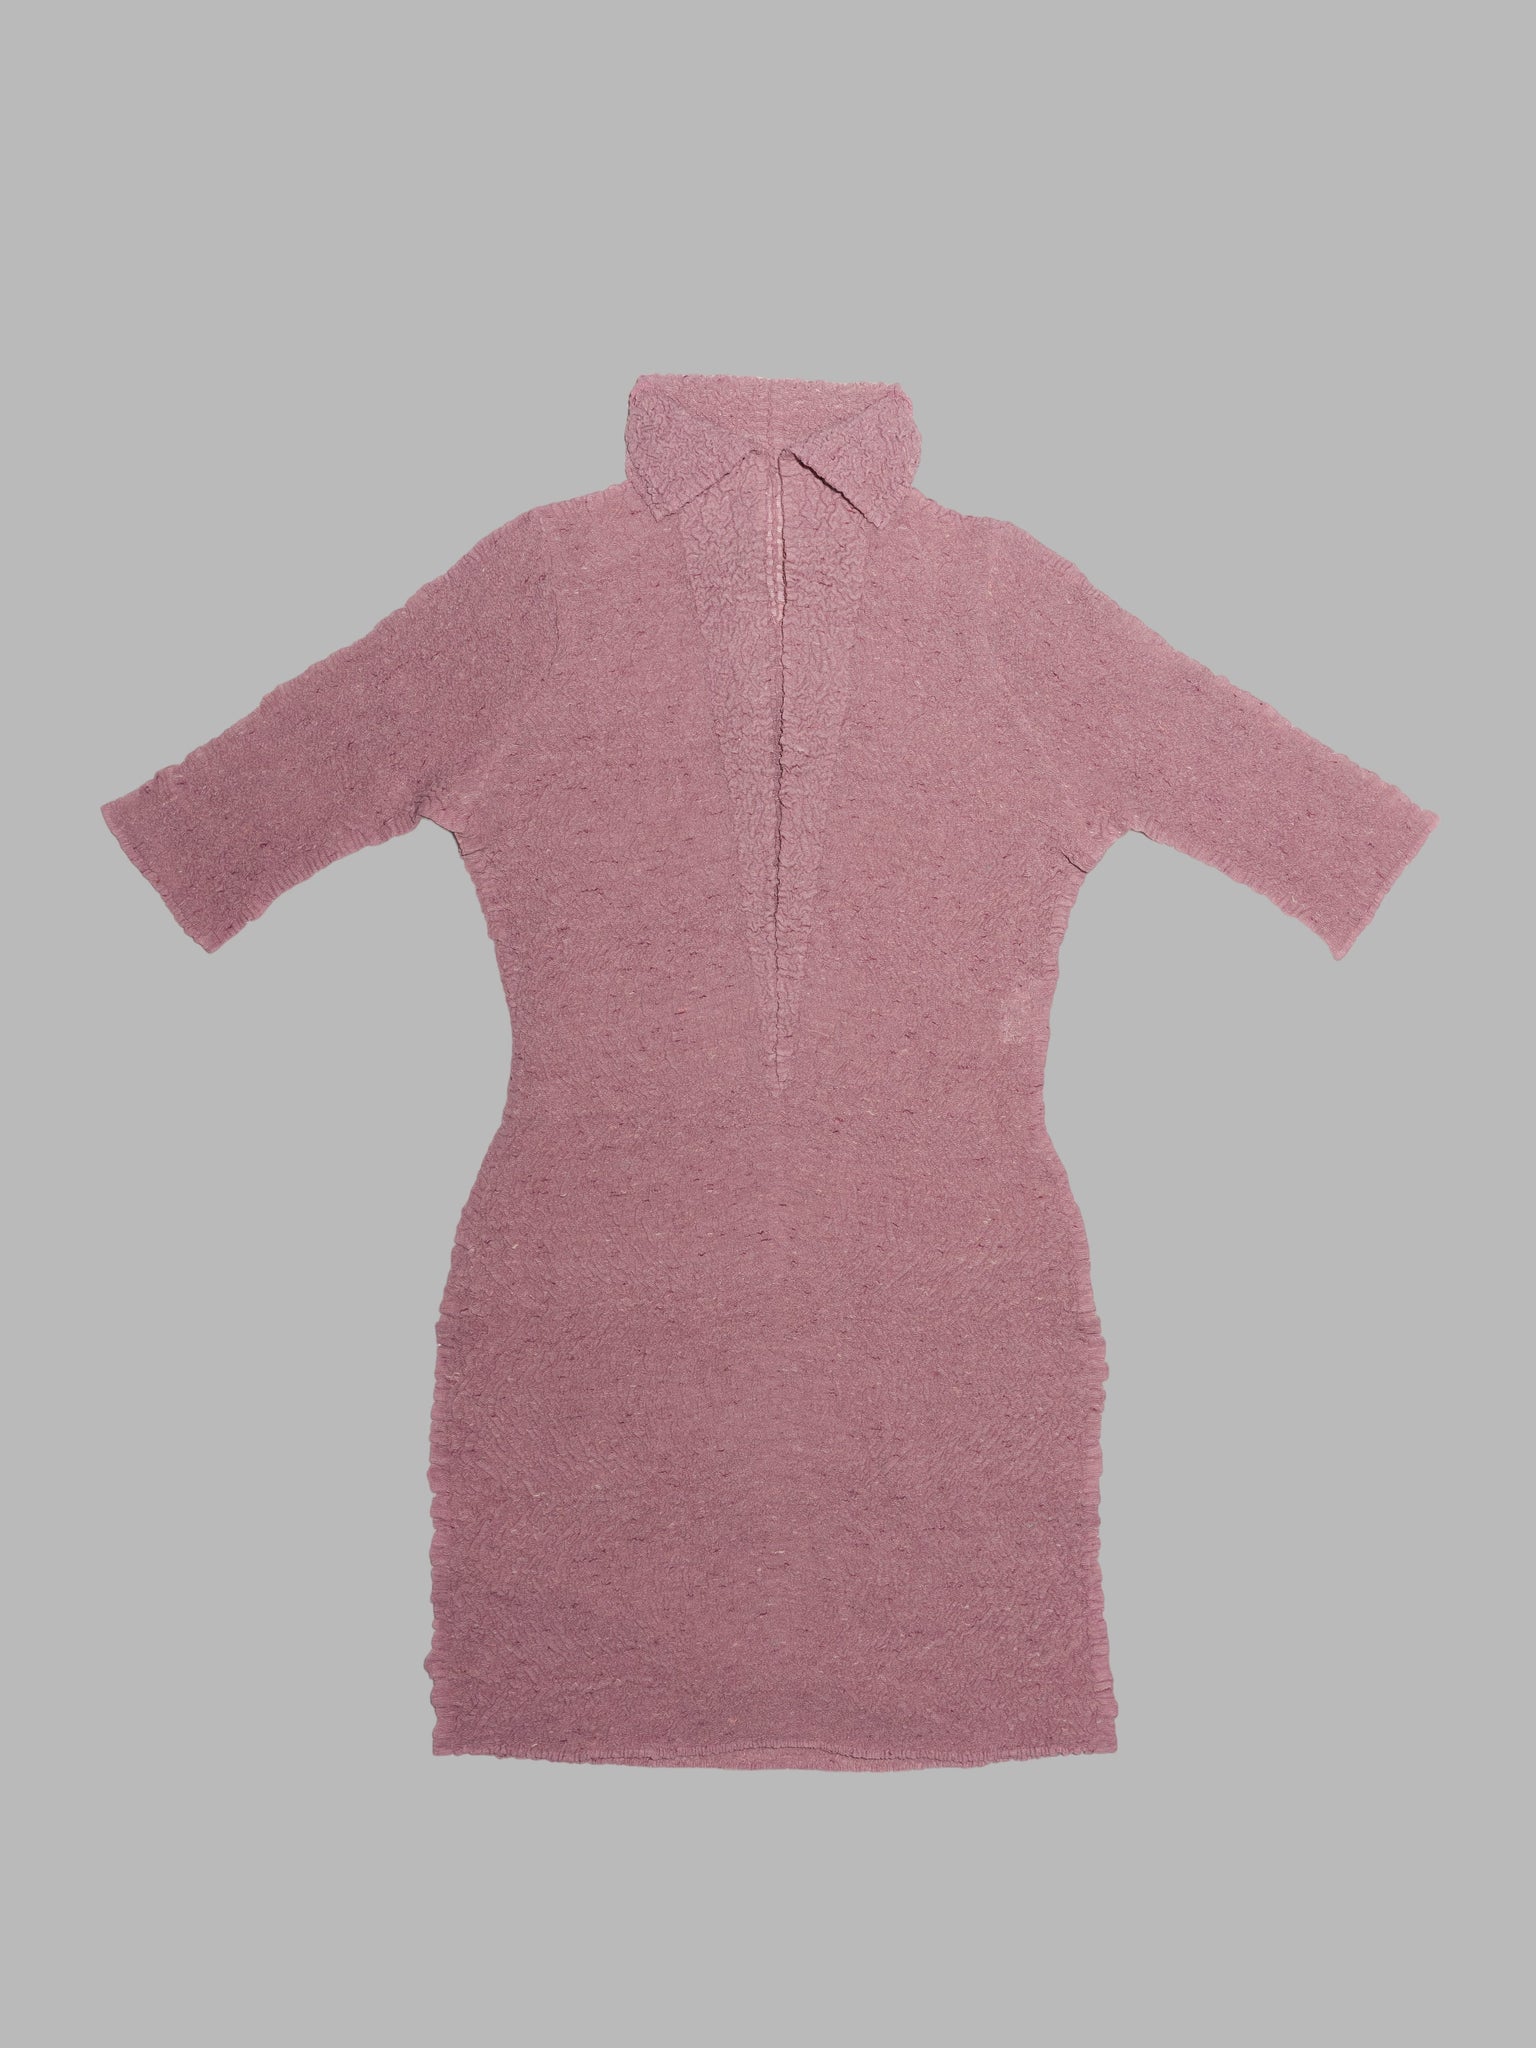 Wrinqle Inoue Pleats pale pink wrinkled polyester half sleeve dress